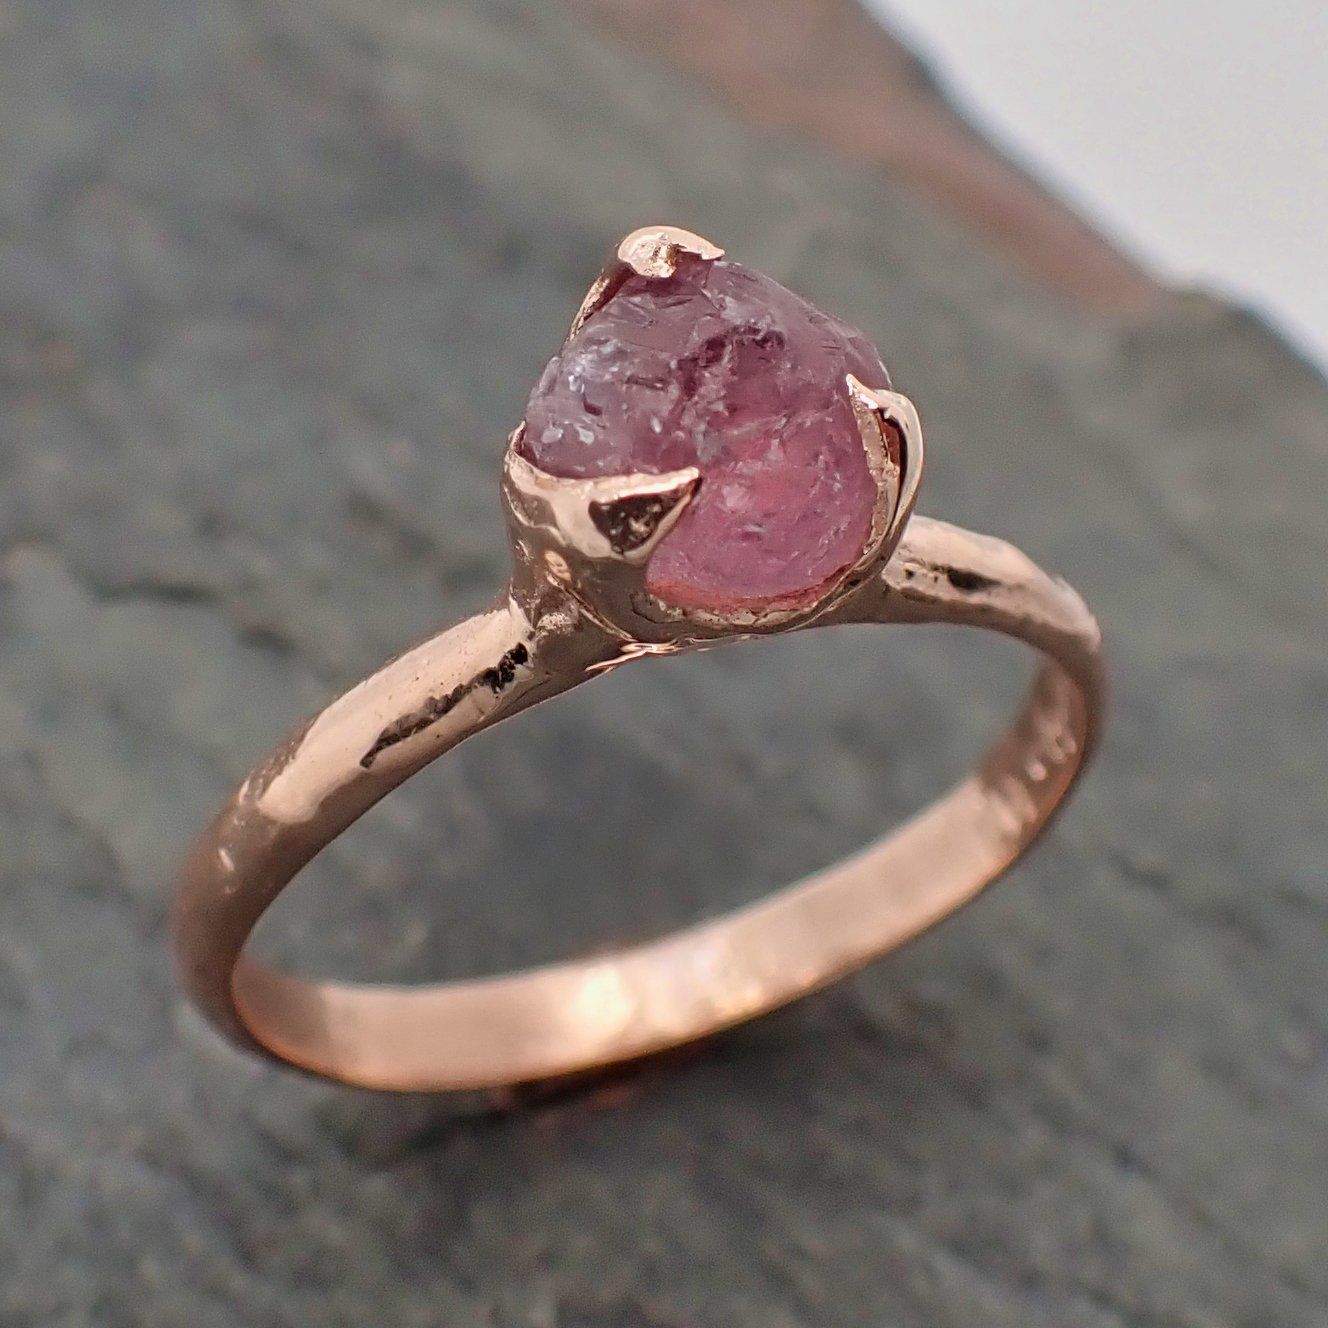 raw pink sapphire montana sapphire rose gold engagement wedding custom gemstone solitaire ring byangeline 2211 Alternative Engagement